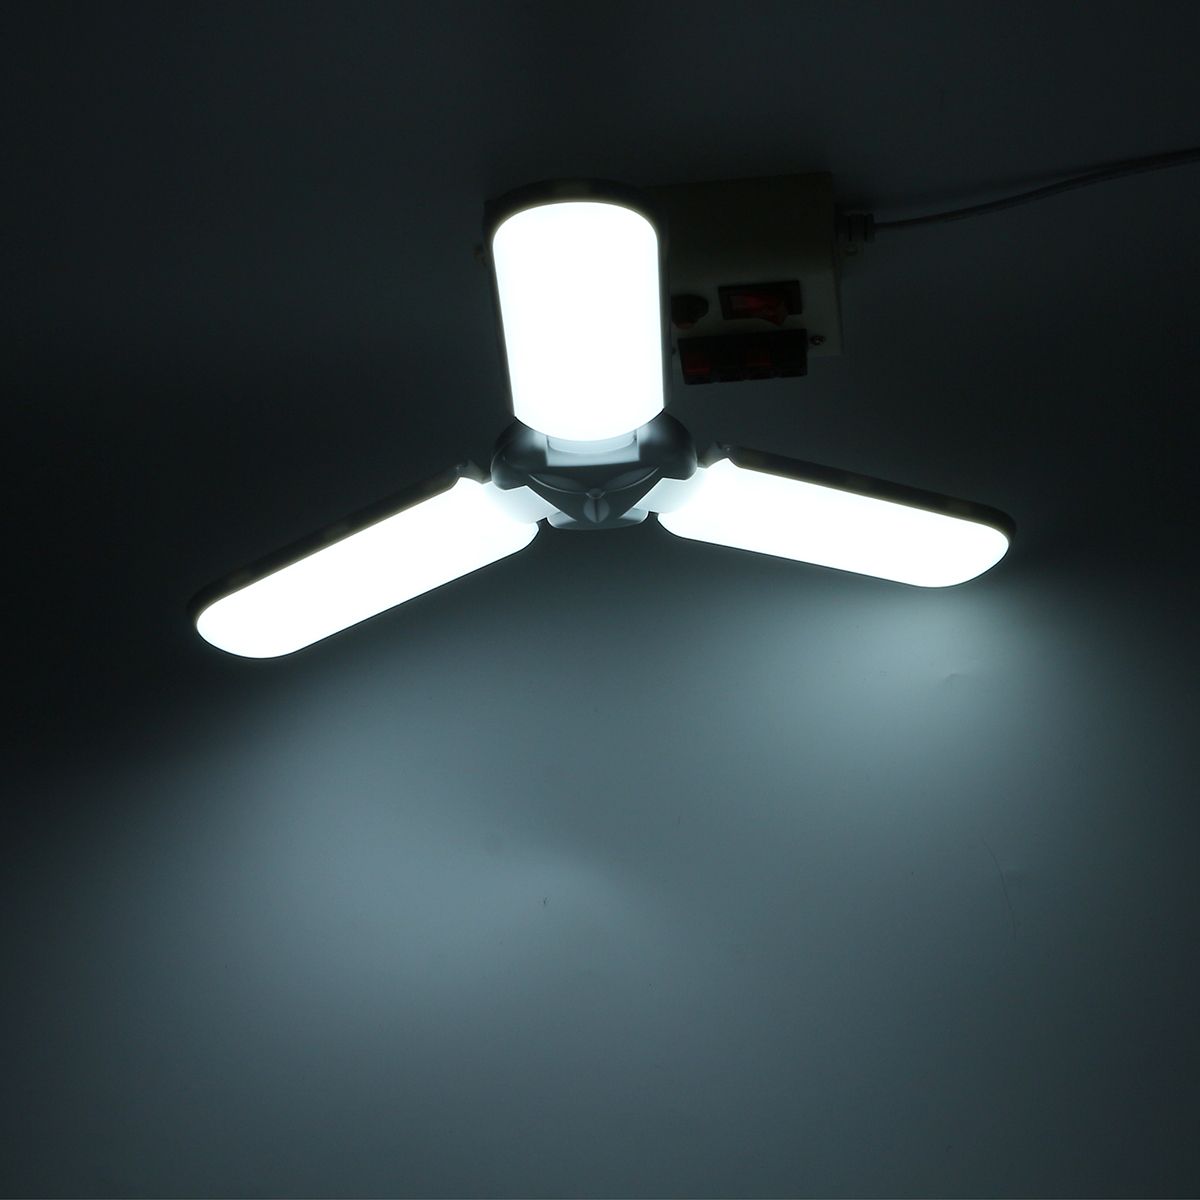 AC165-265V-45W-E27-3-Blade-LED-Garage-Light-Deformable-Ceiling-Lamp-Fixture-Workshop-Bulb-1723875